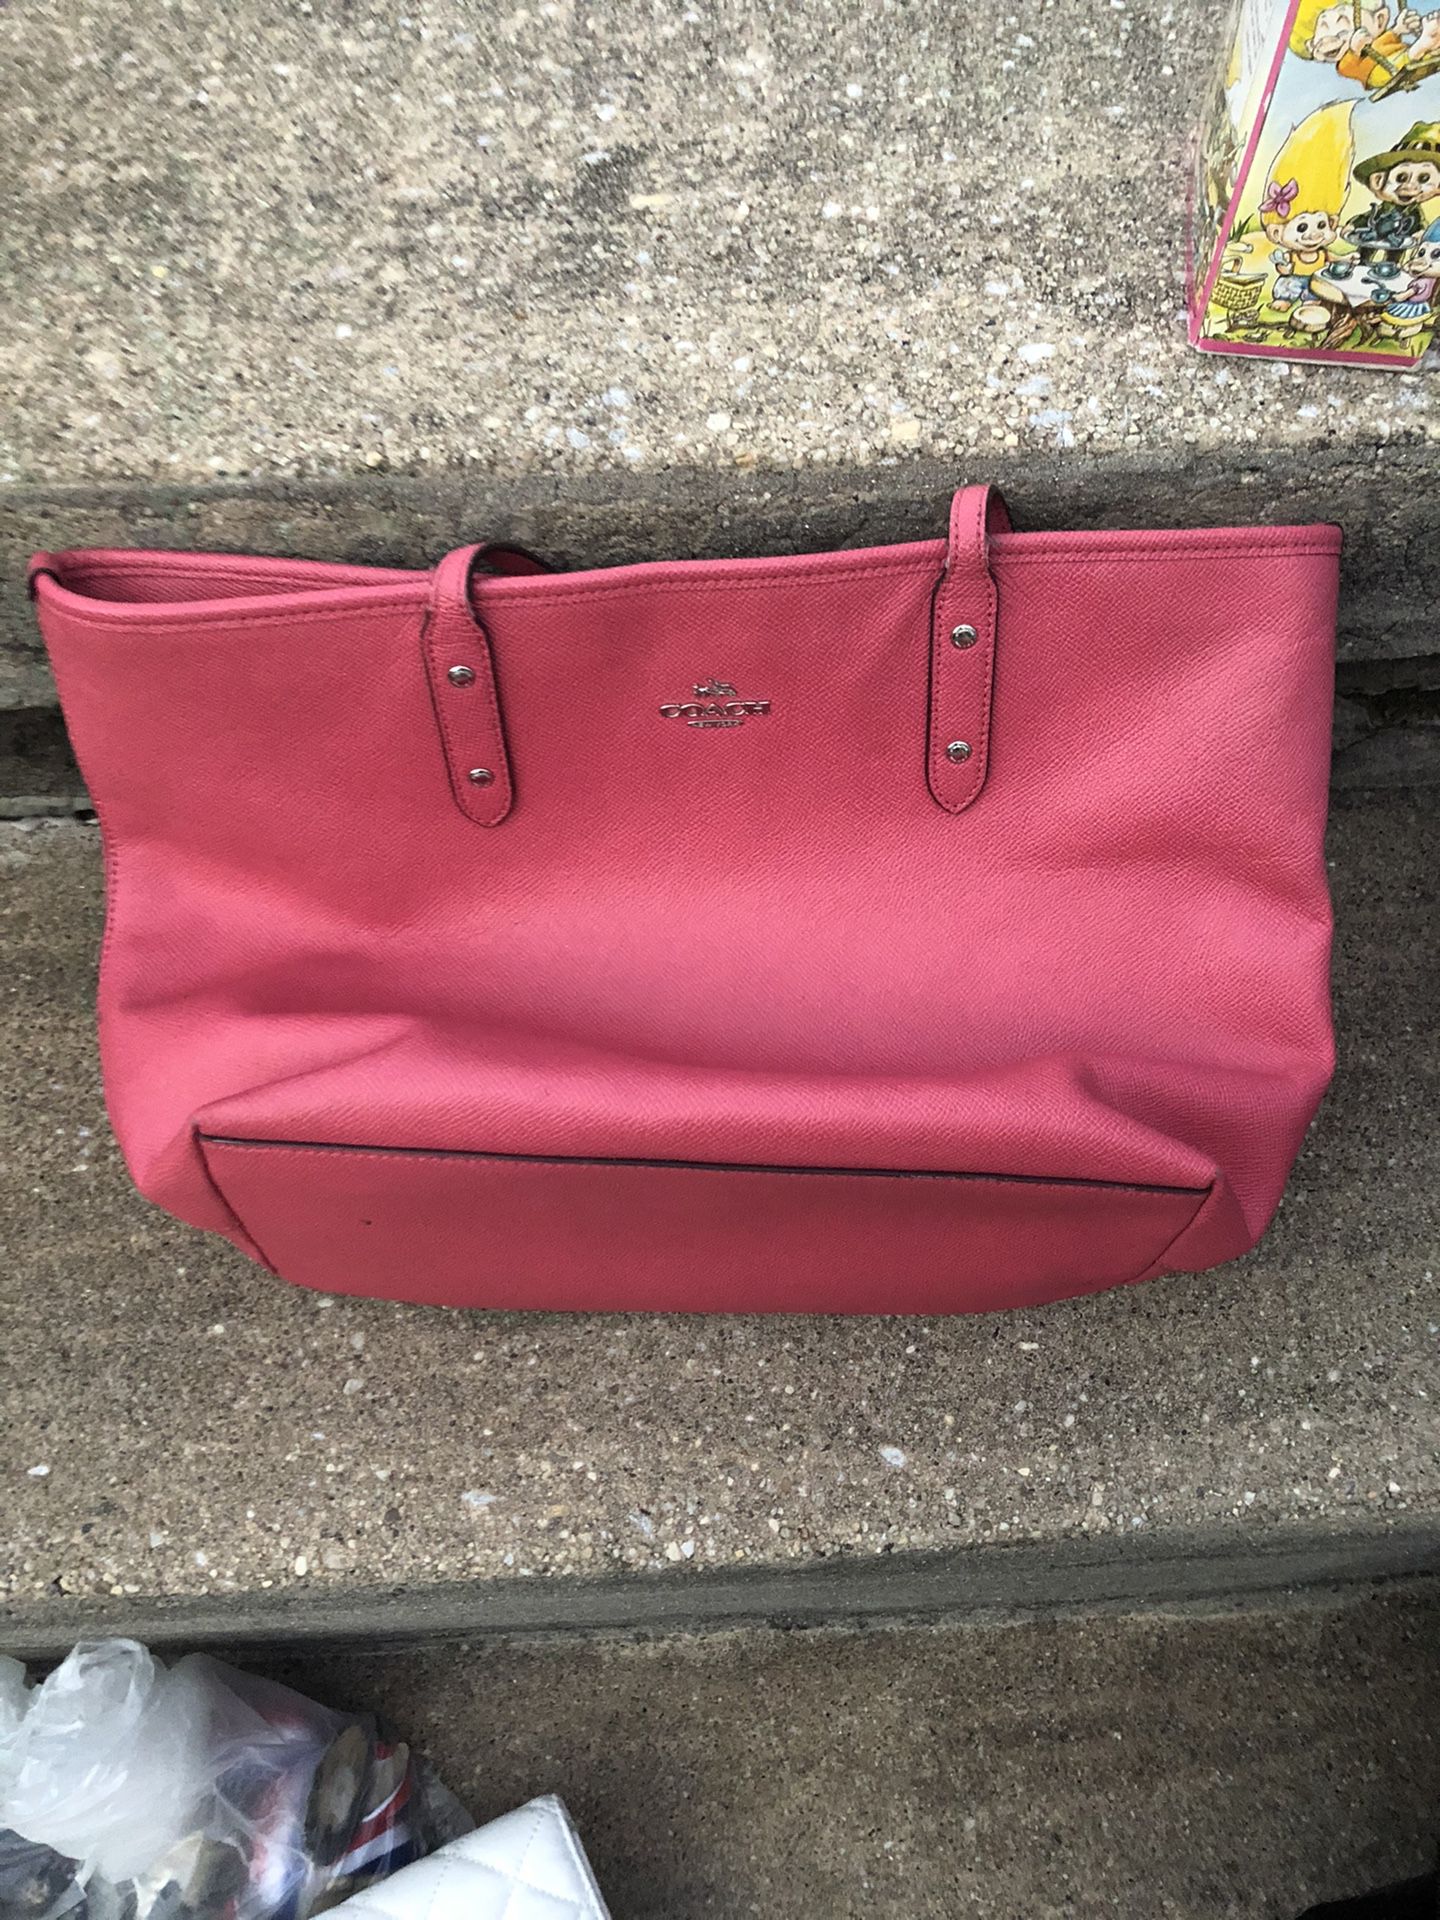 Pink coach like new purse